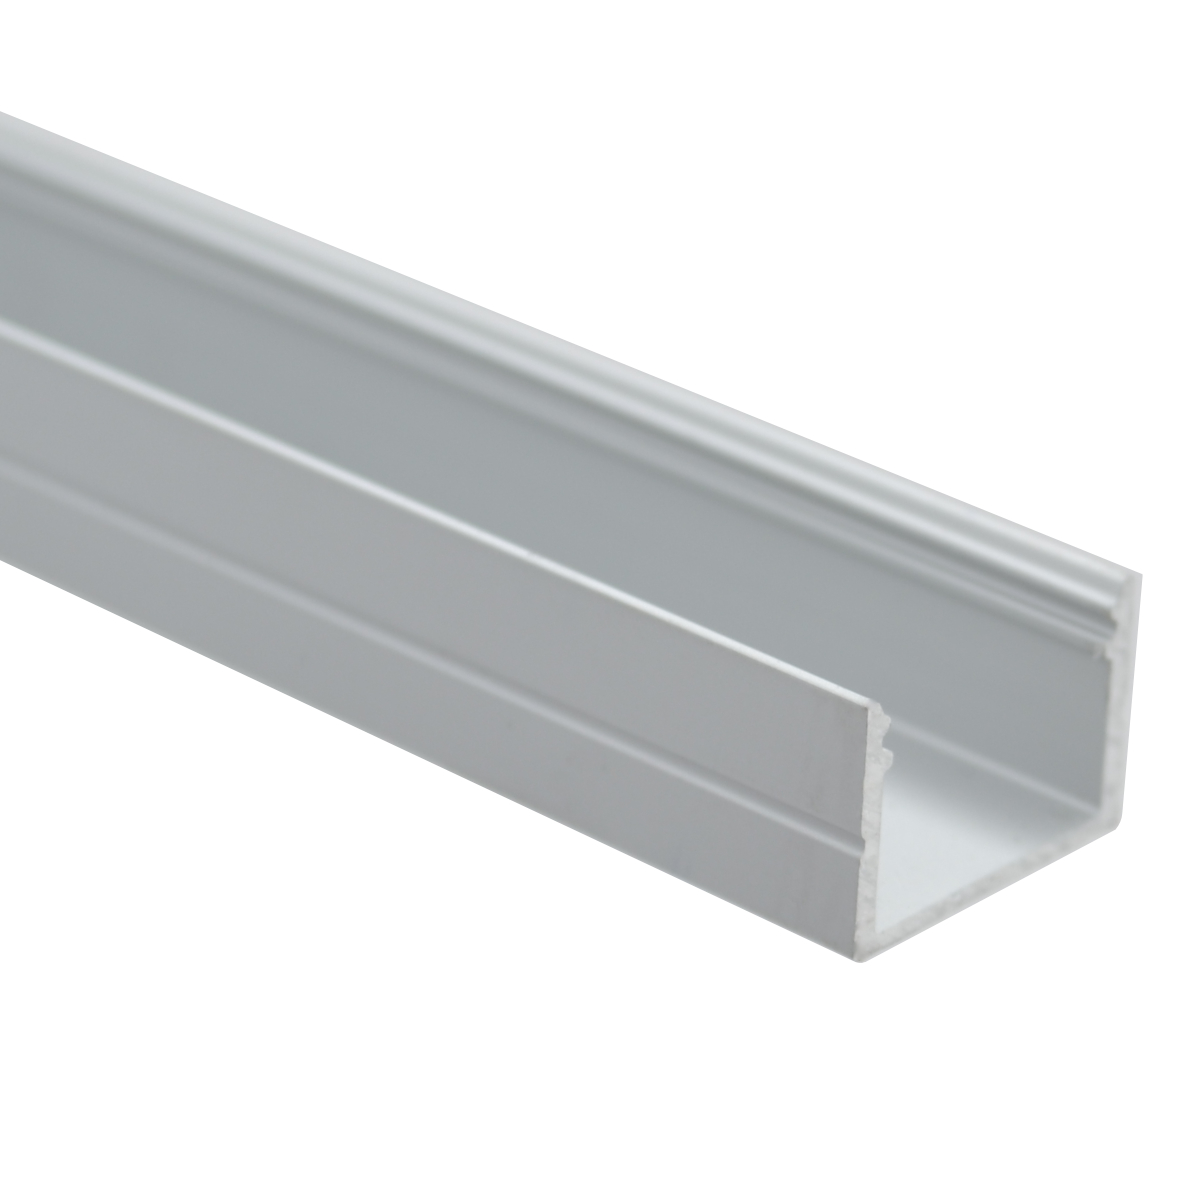 LED Aluminum Profiles For LED Strips